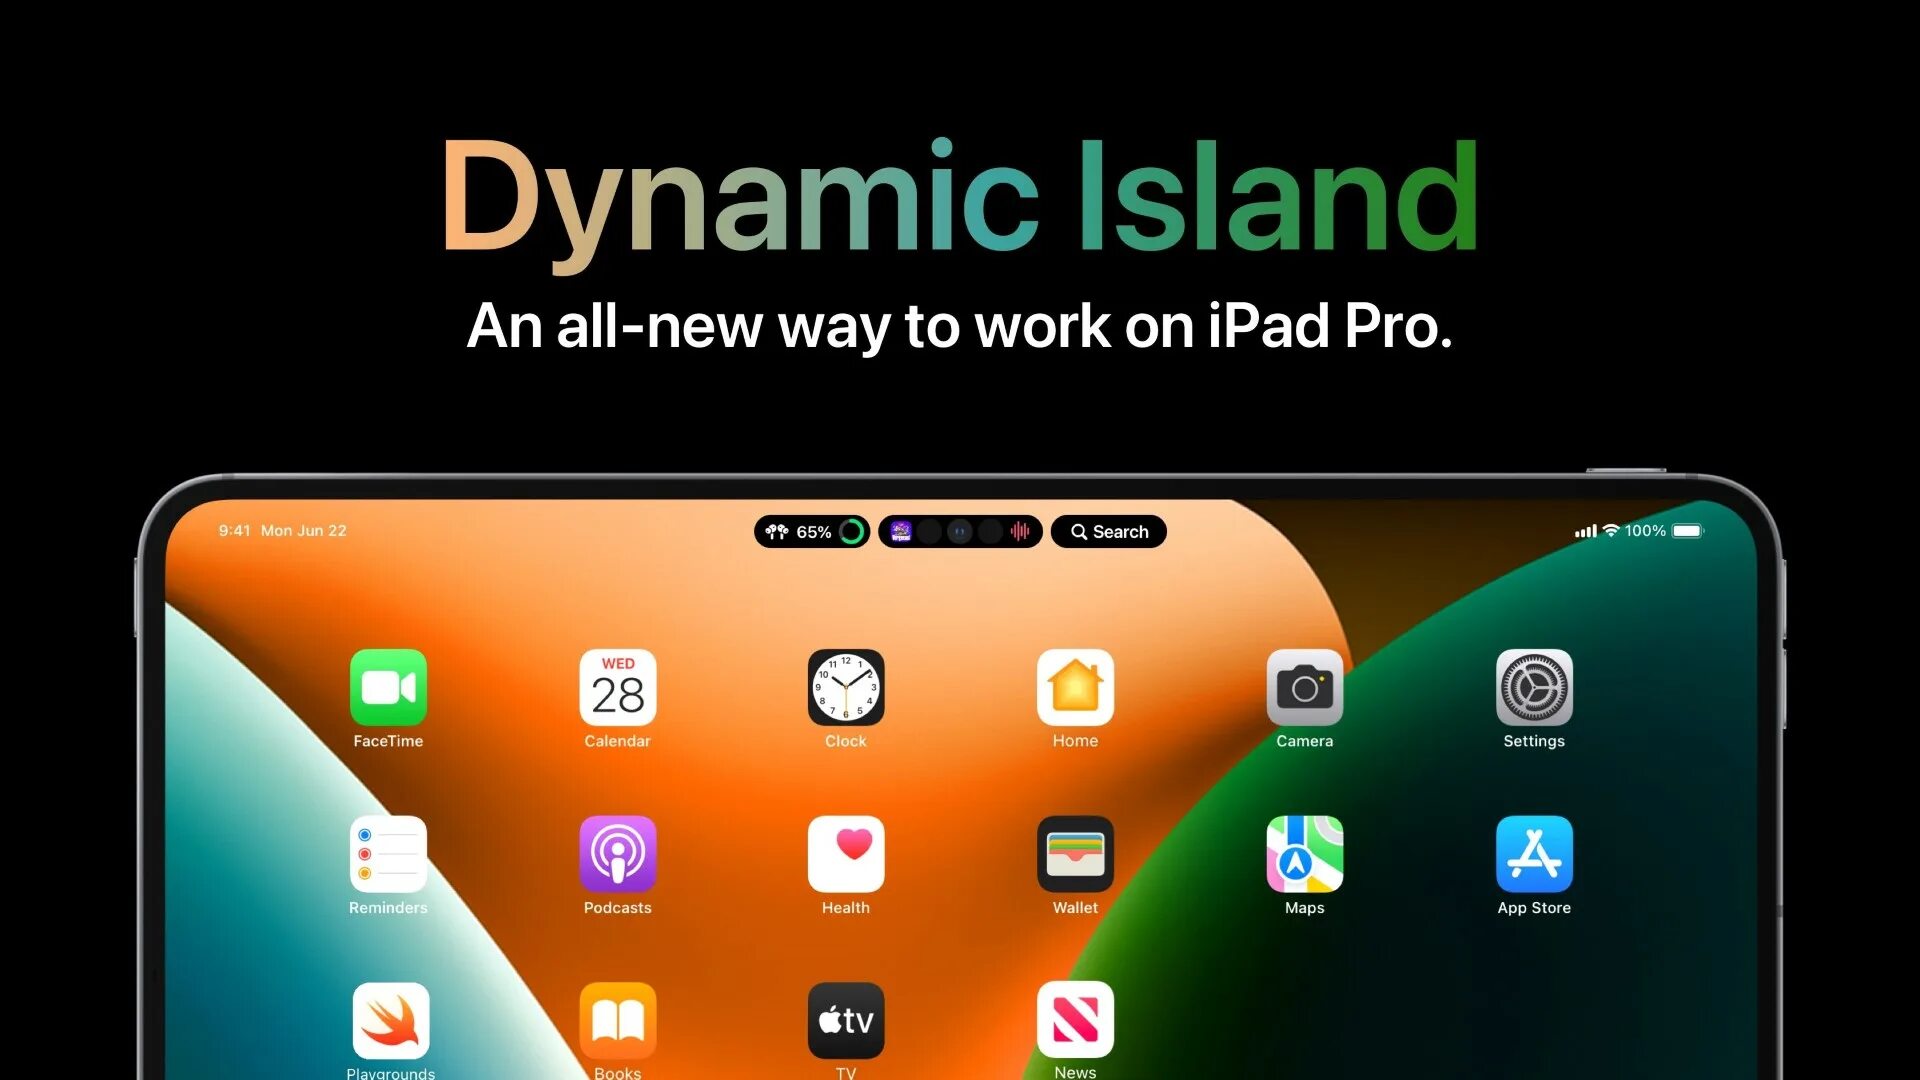 Iphone 14 Pro Dynamic Island. Динамик Айленд айфон 14. IPAD Pro 2023. IPAD Pro Dynamic Island.